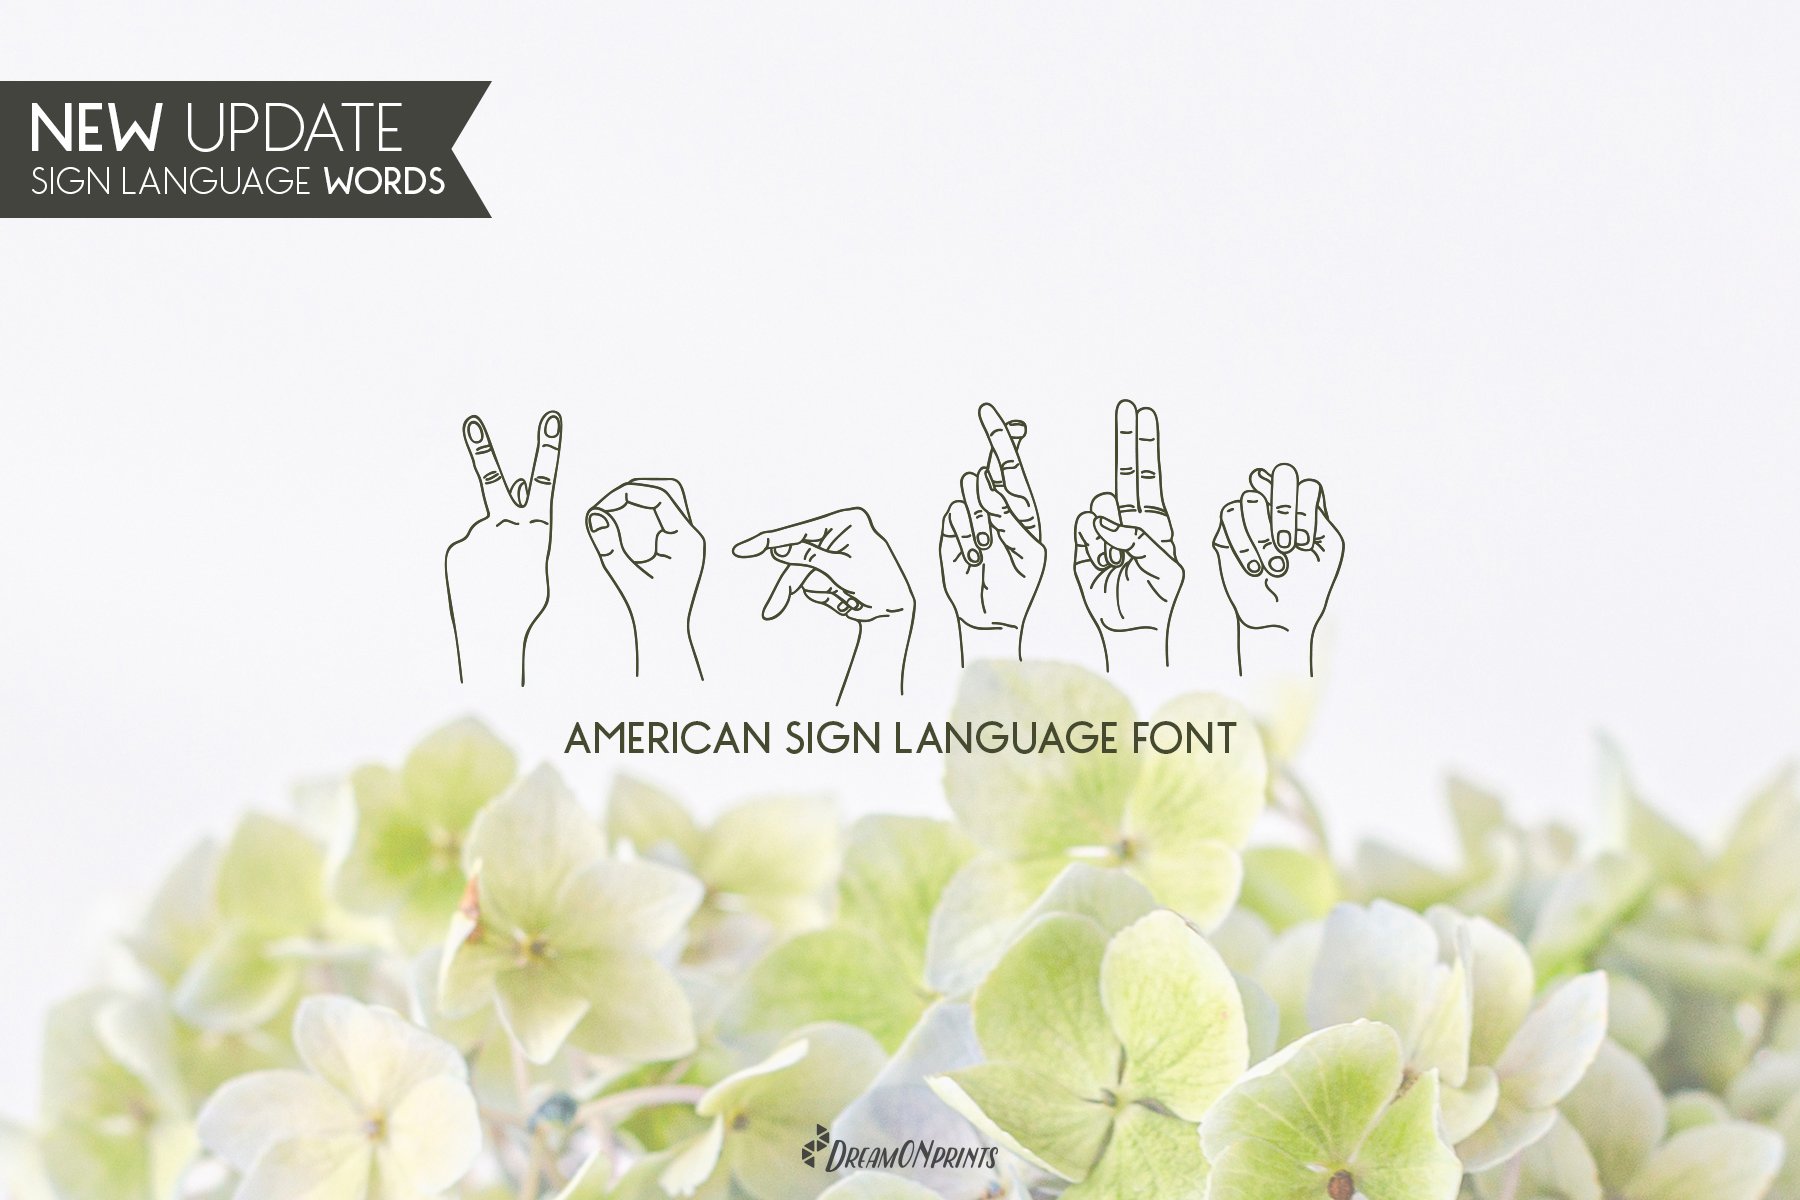 Koprun - American Sign Language Font cover image.